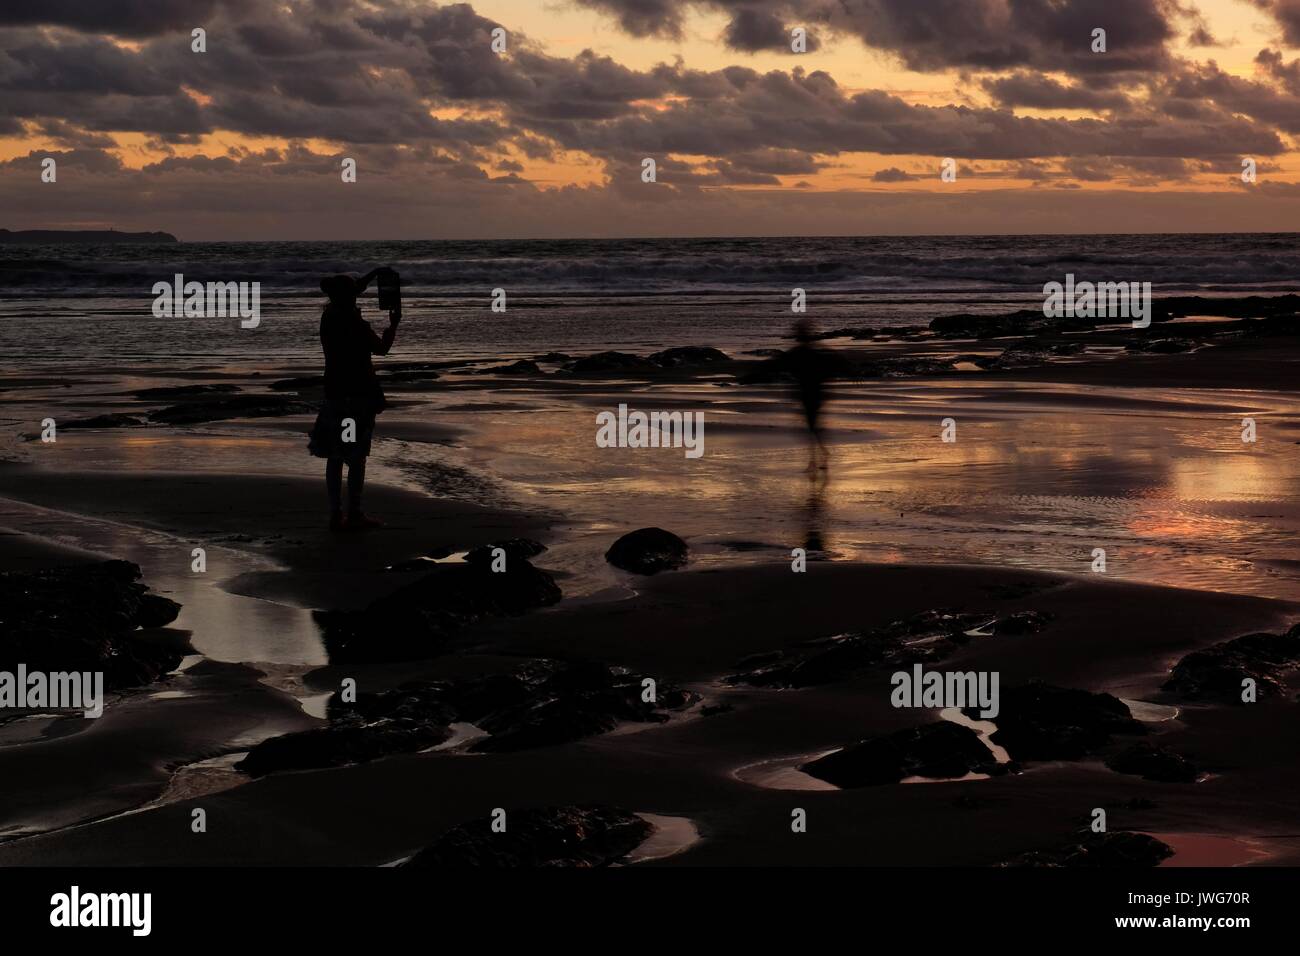 iPad photography on the beach Stock Photo